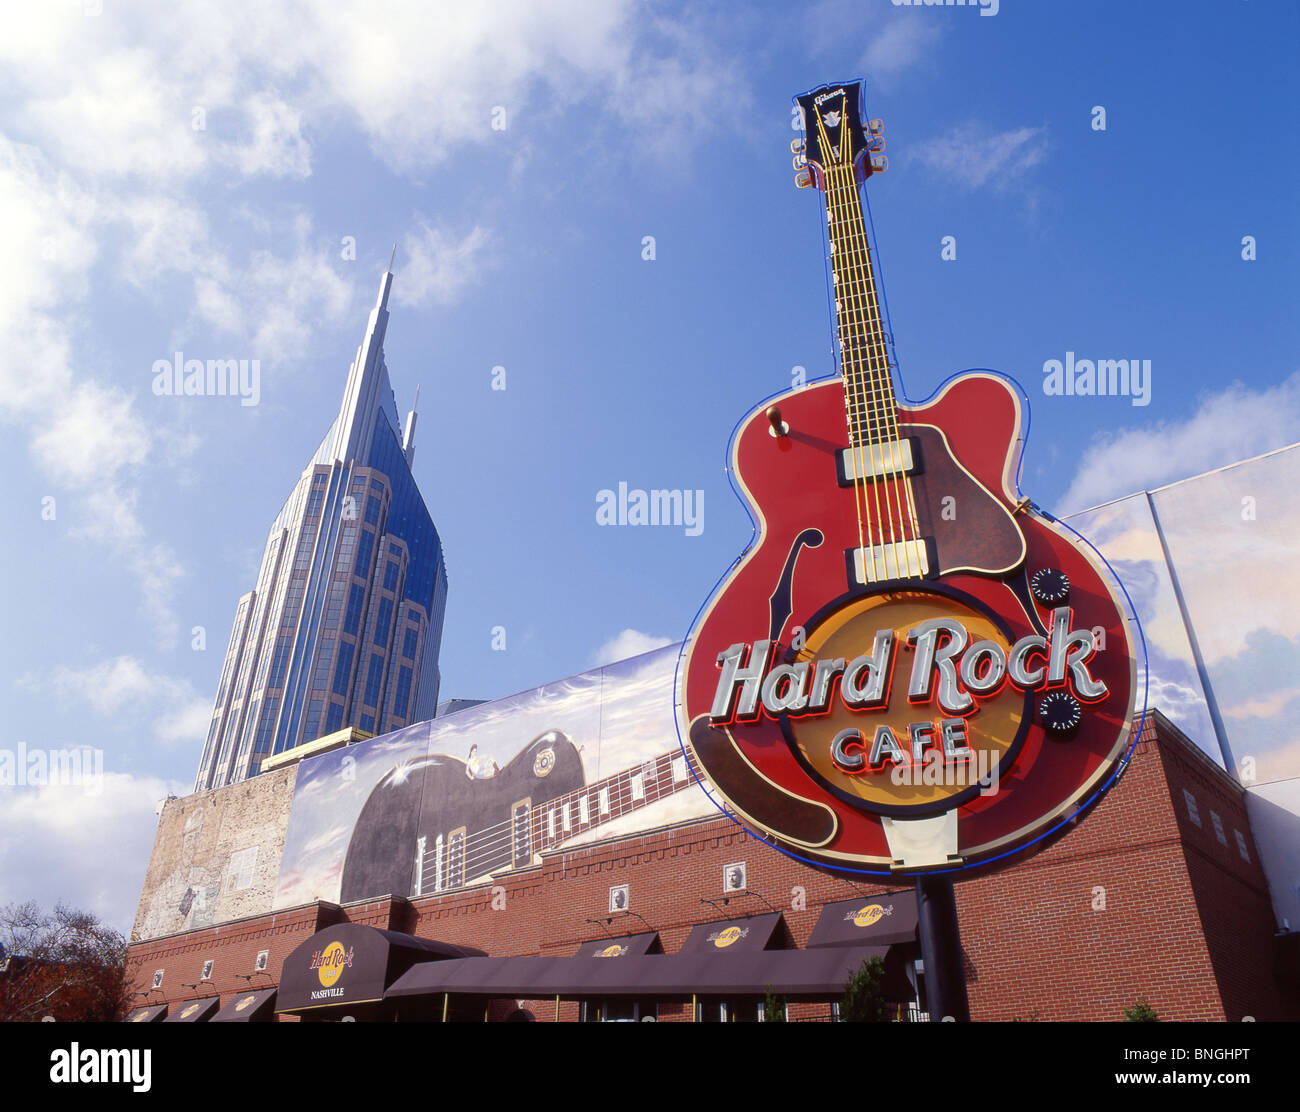 Cartel de guitarra de Hard Rock Cafe, Nashville, Tennessee, Estados Unidos  de América Fotografía de stock - Alamy